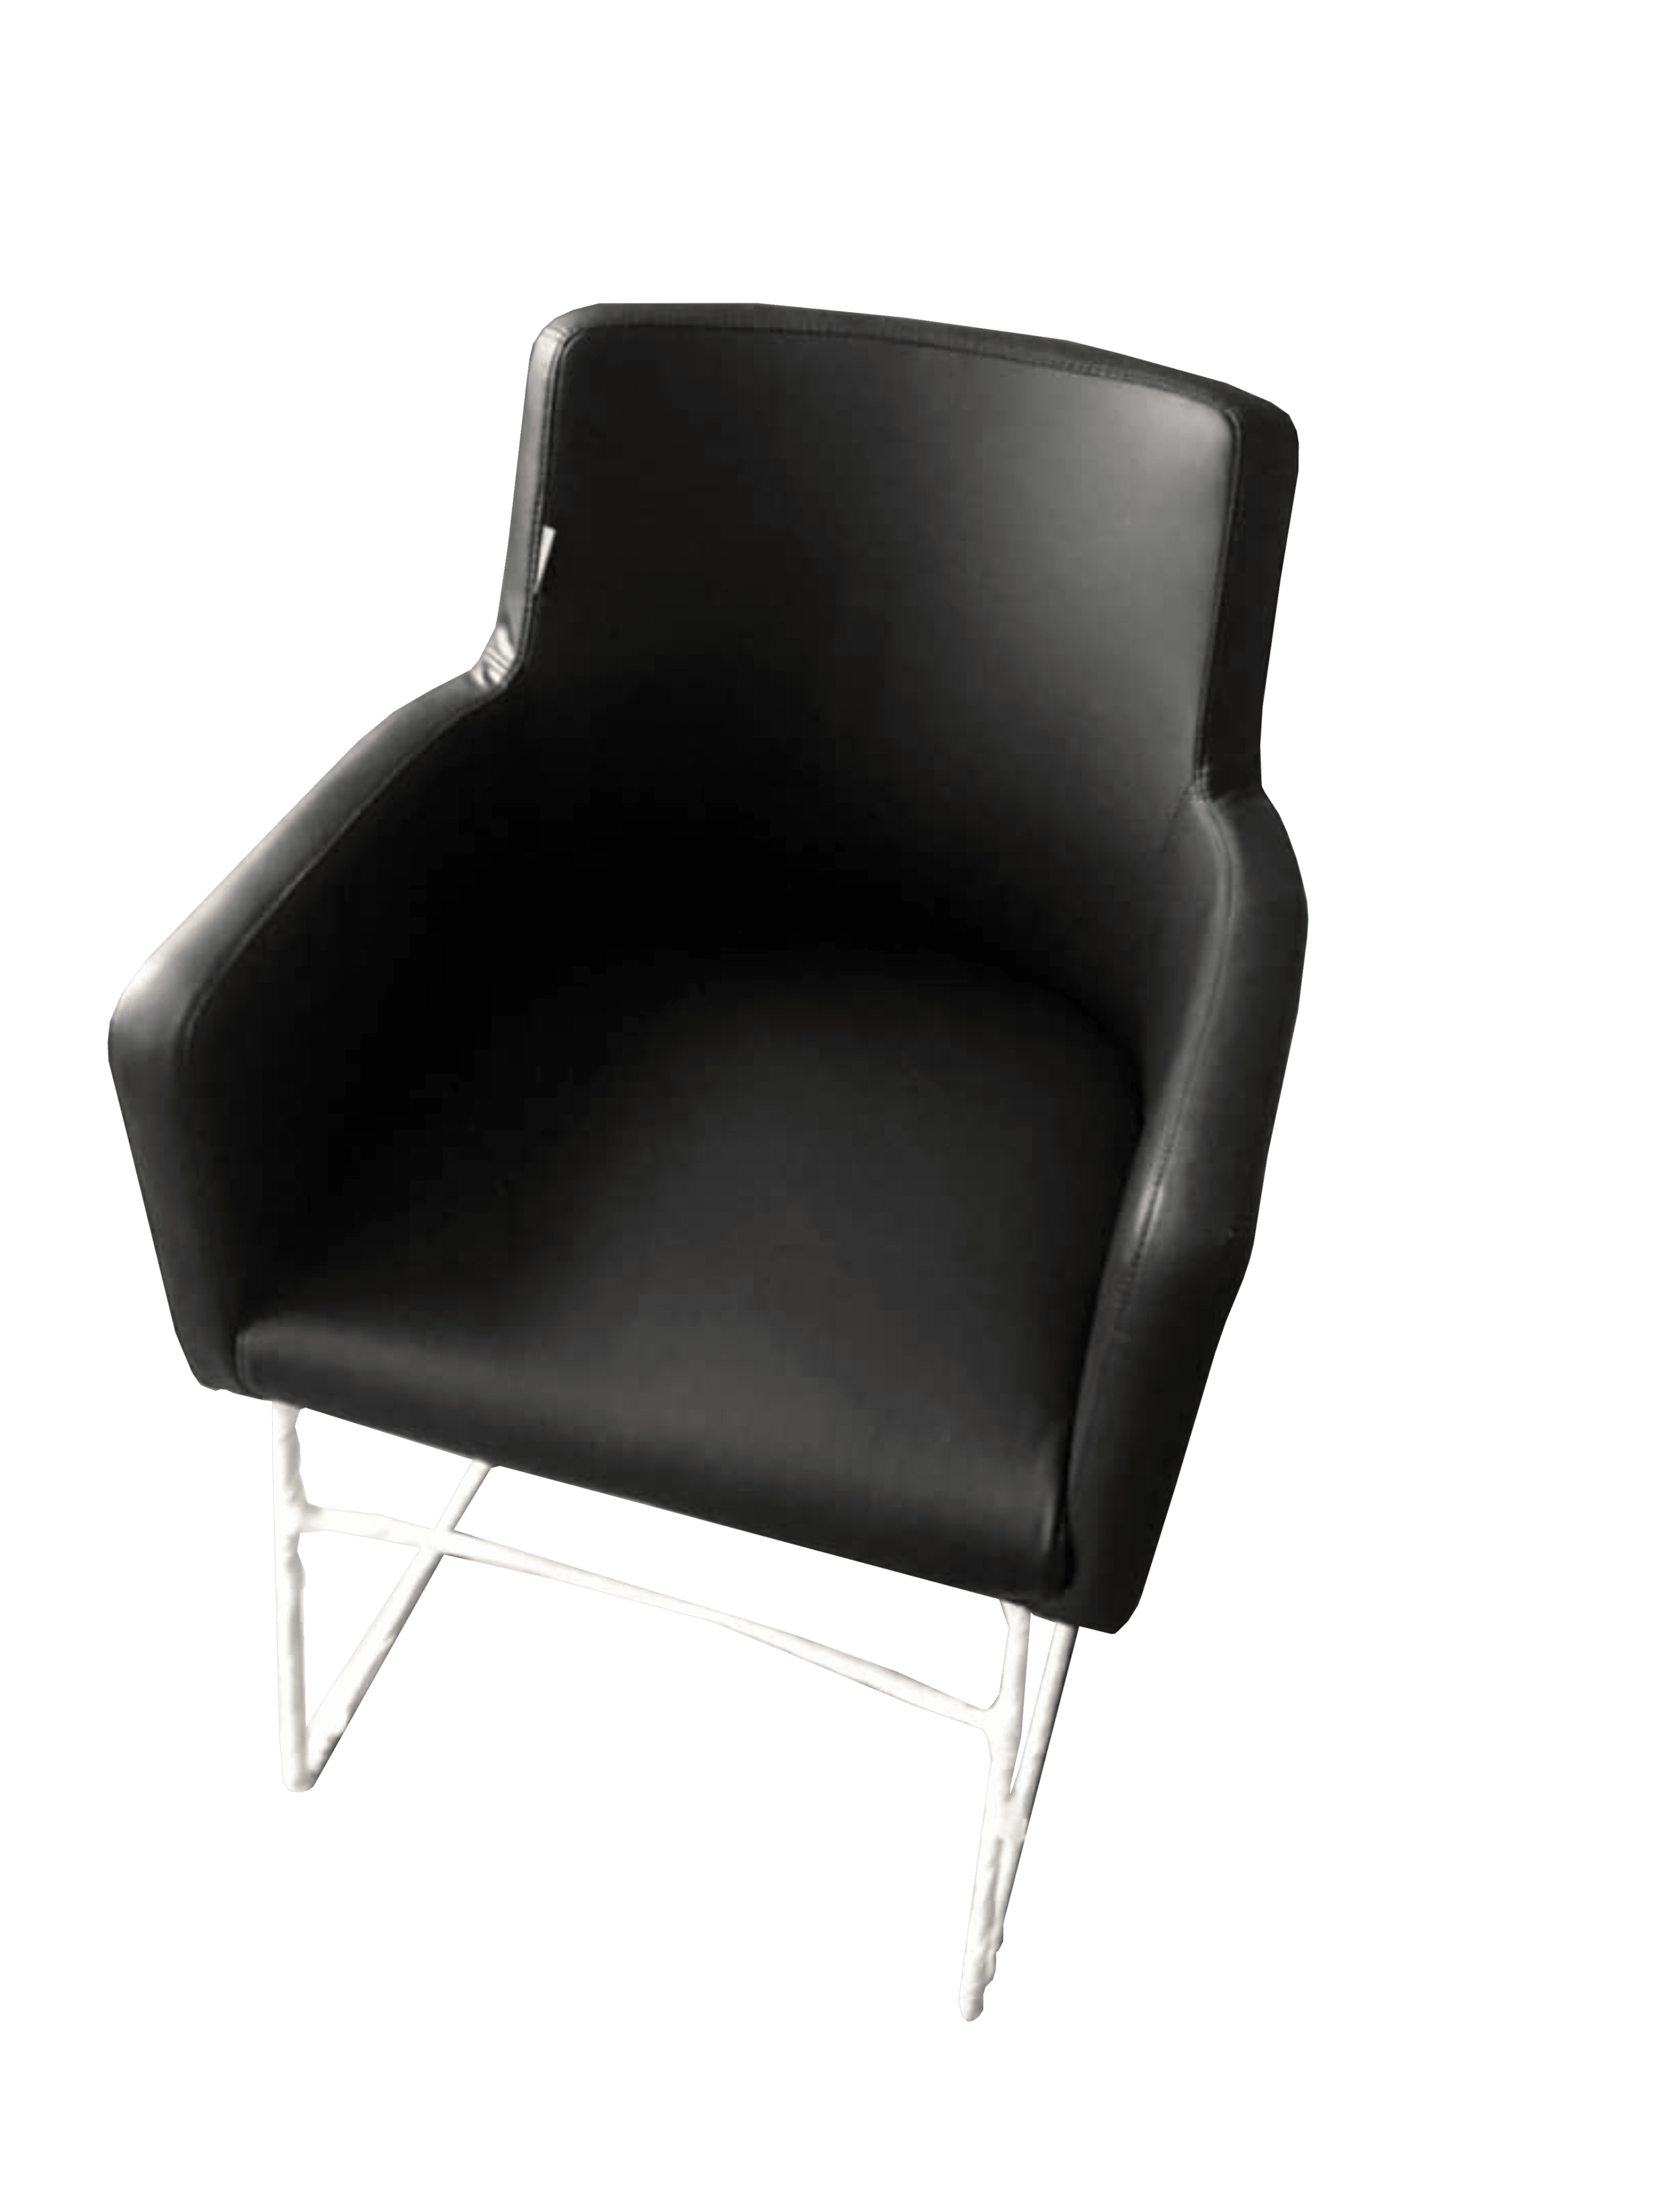 Tiotto PU Leather Tub Single Lounge Chair